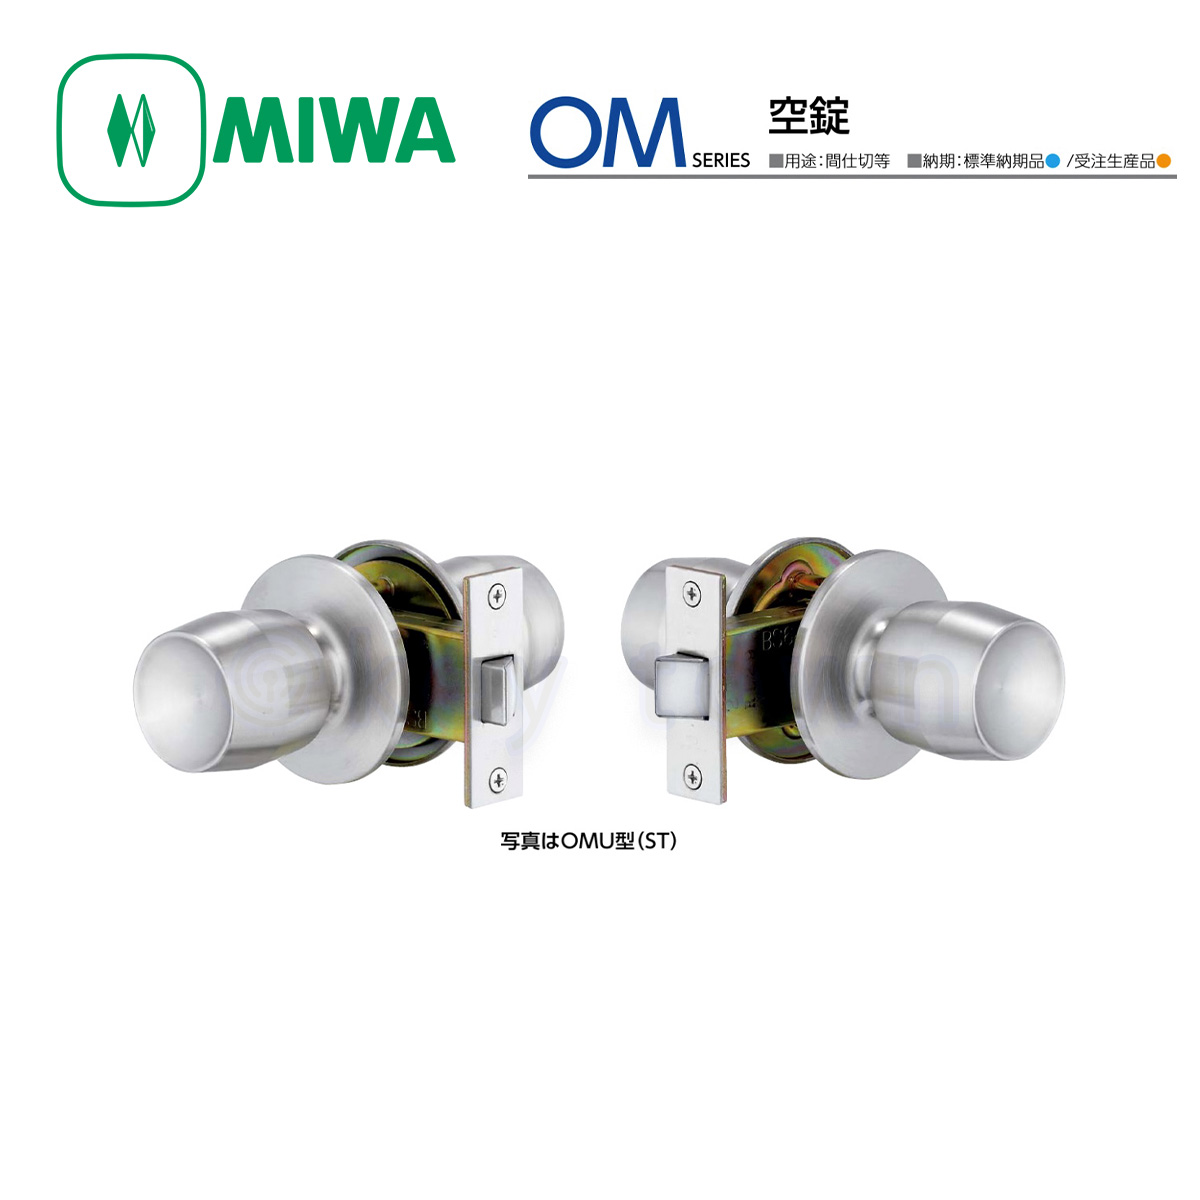 MIWA 【美和ロック】 ホテル用高級ケースロック [MIWA-MA] U9MAD-1型 